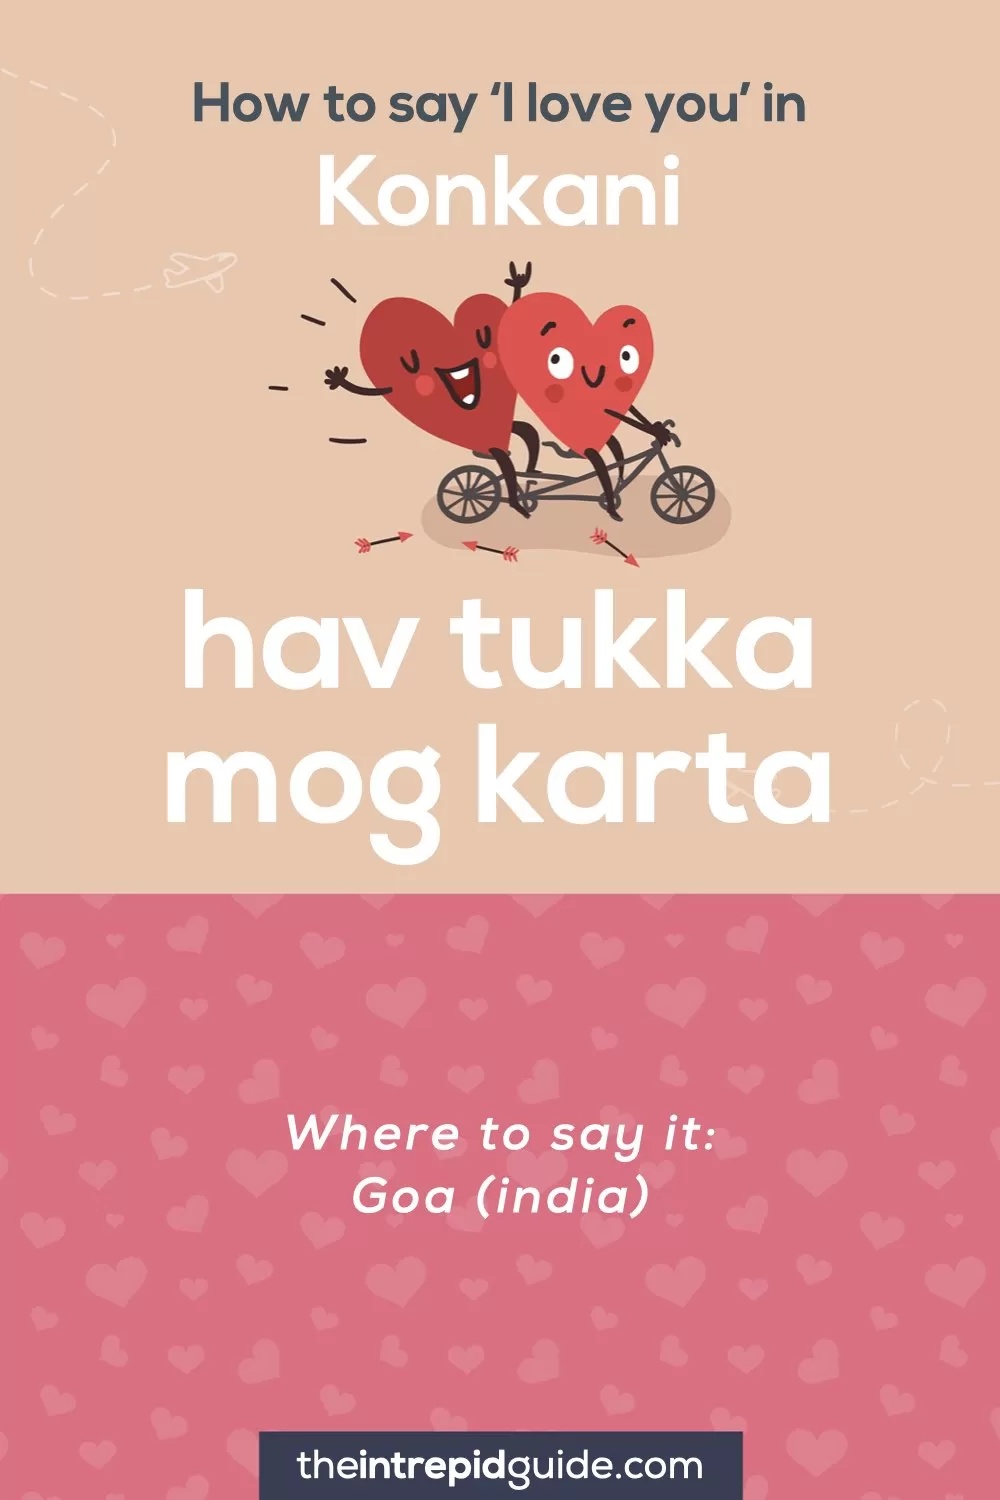 How to say I love you in different languages - Konkani - hav tukka mog karta